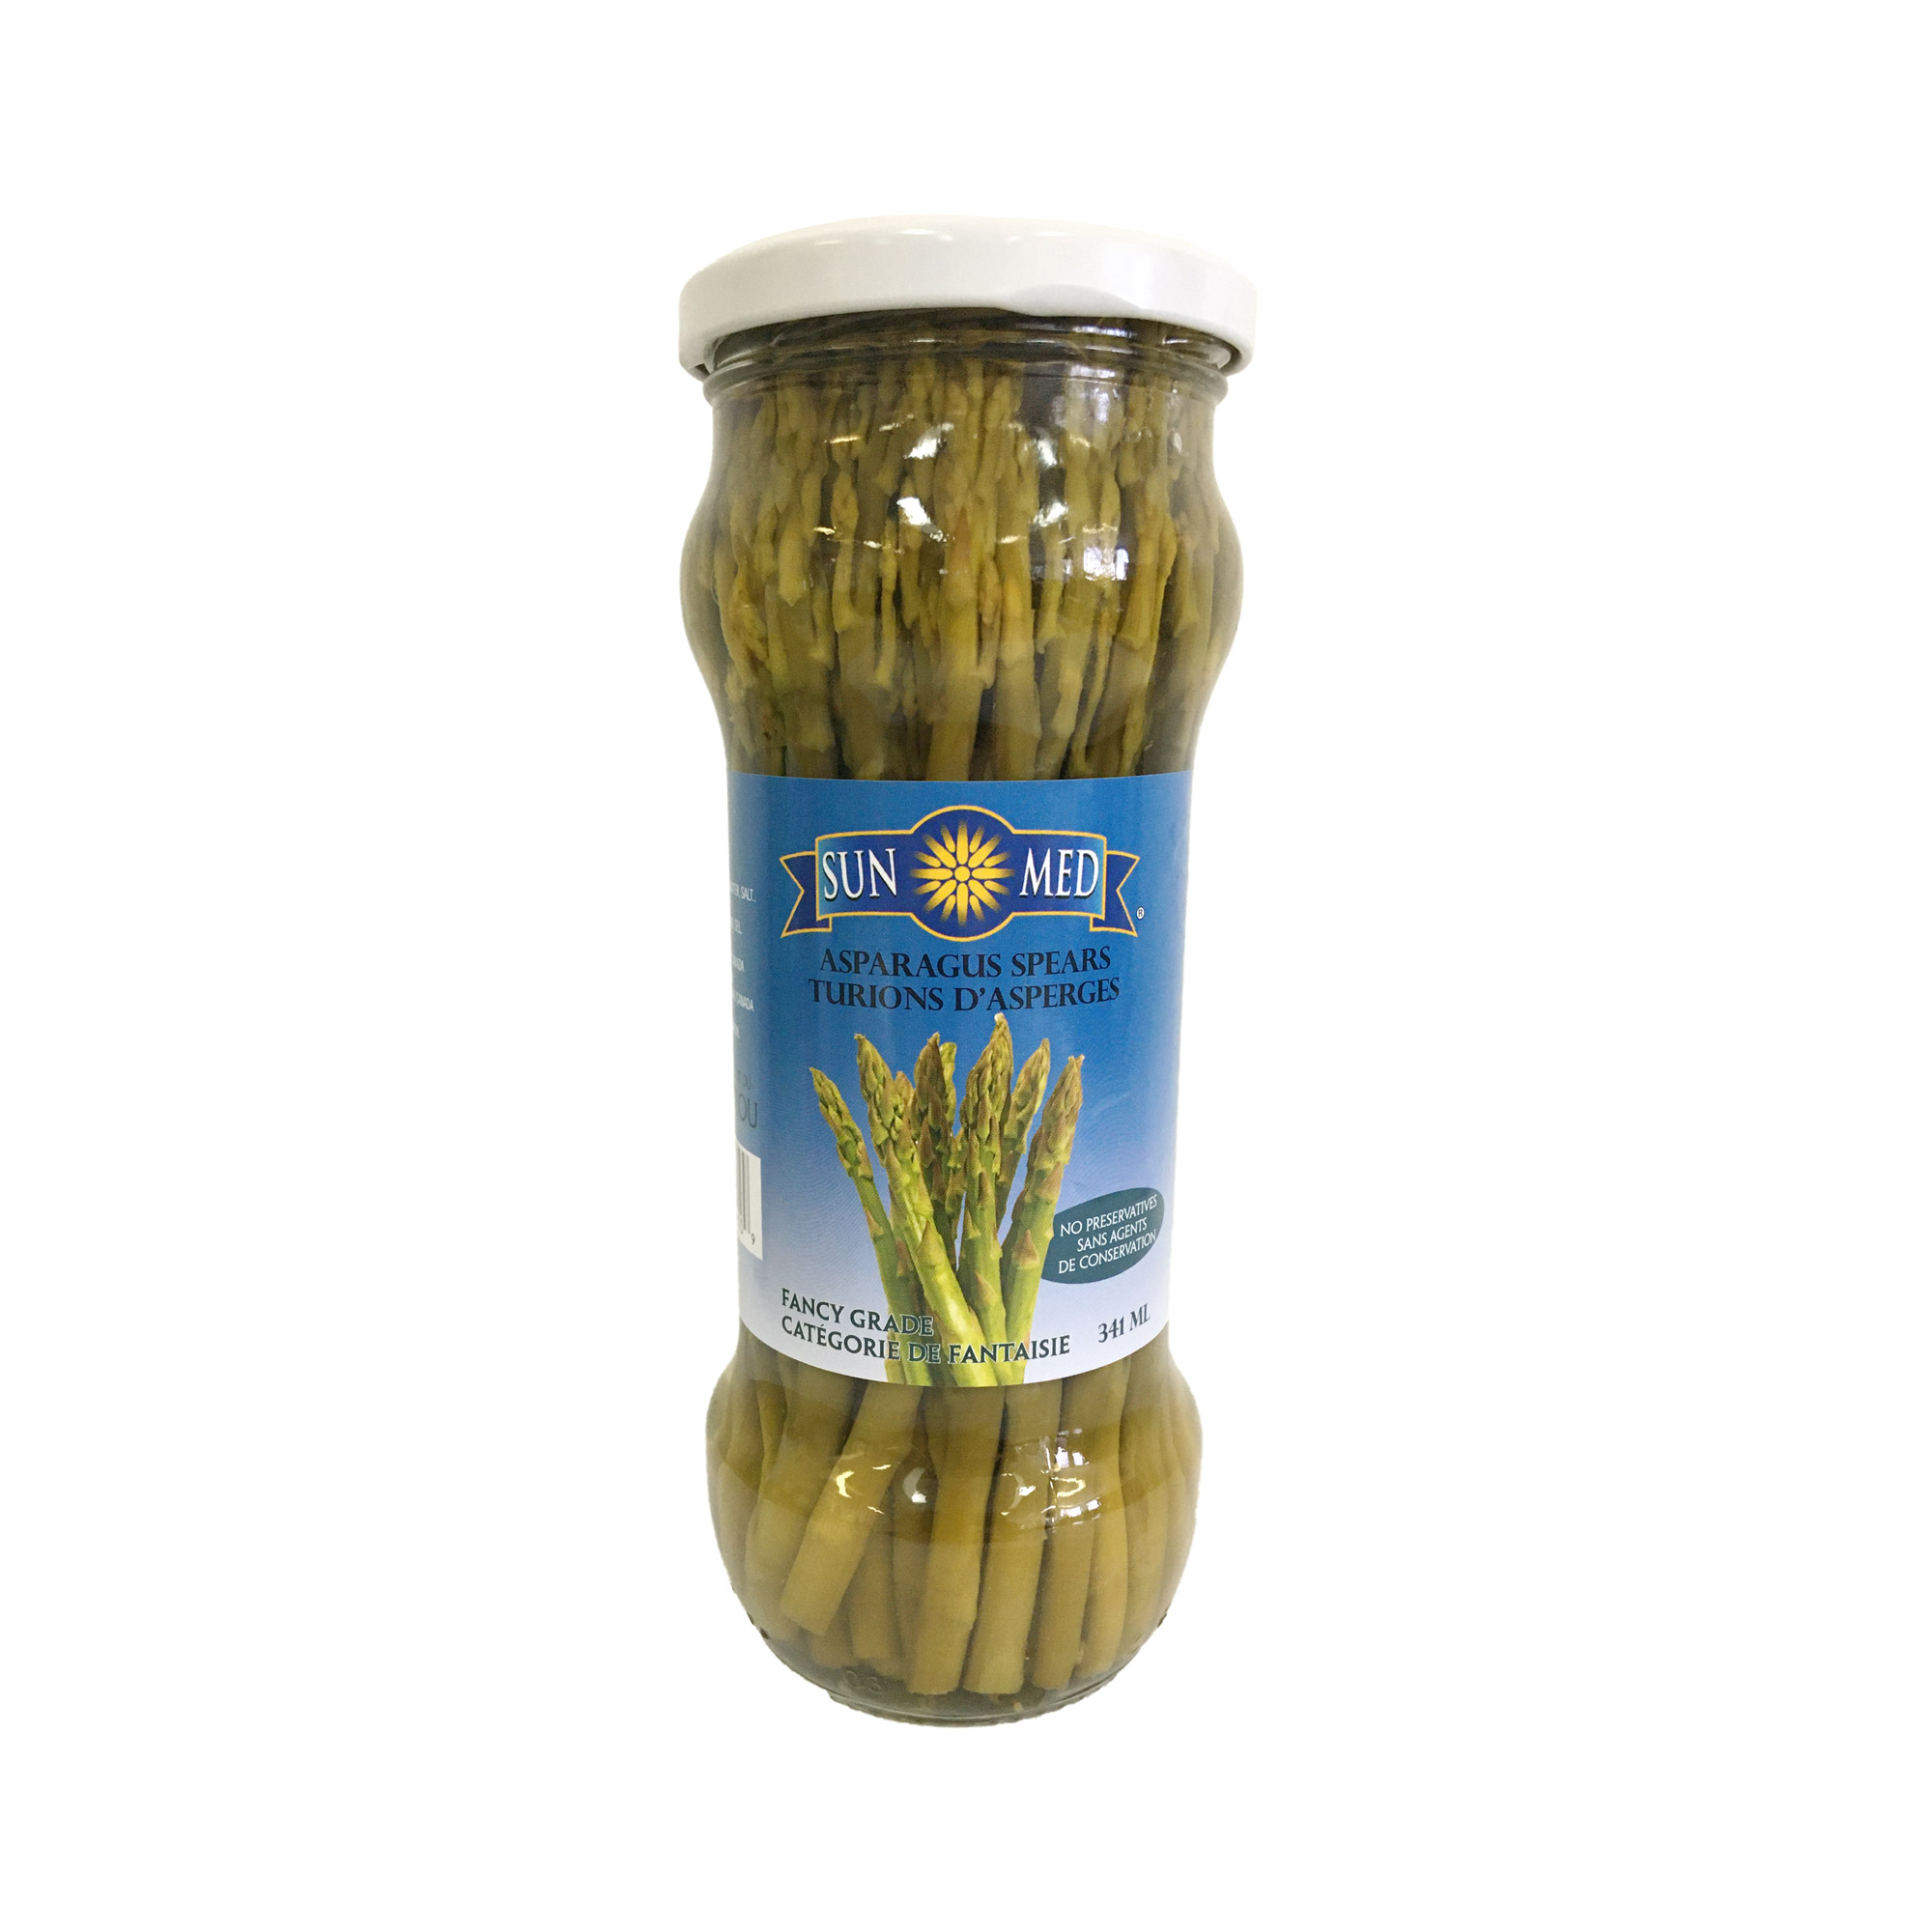 Asparagus spears in jars – 341ml